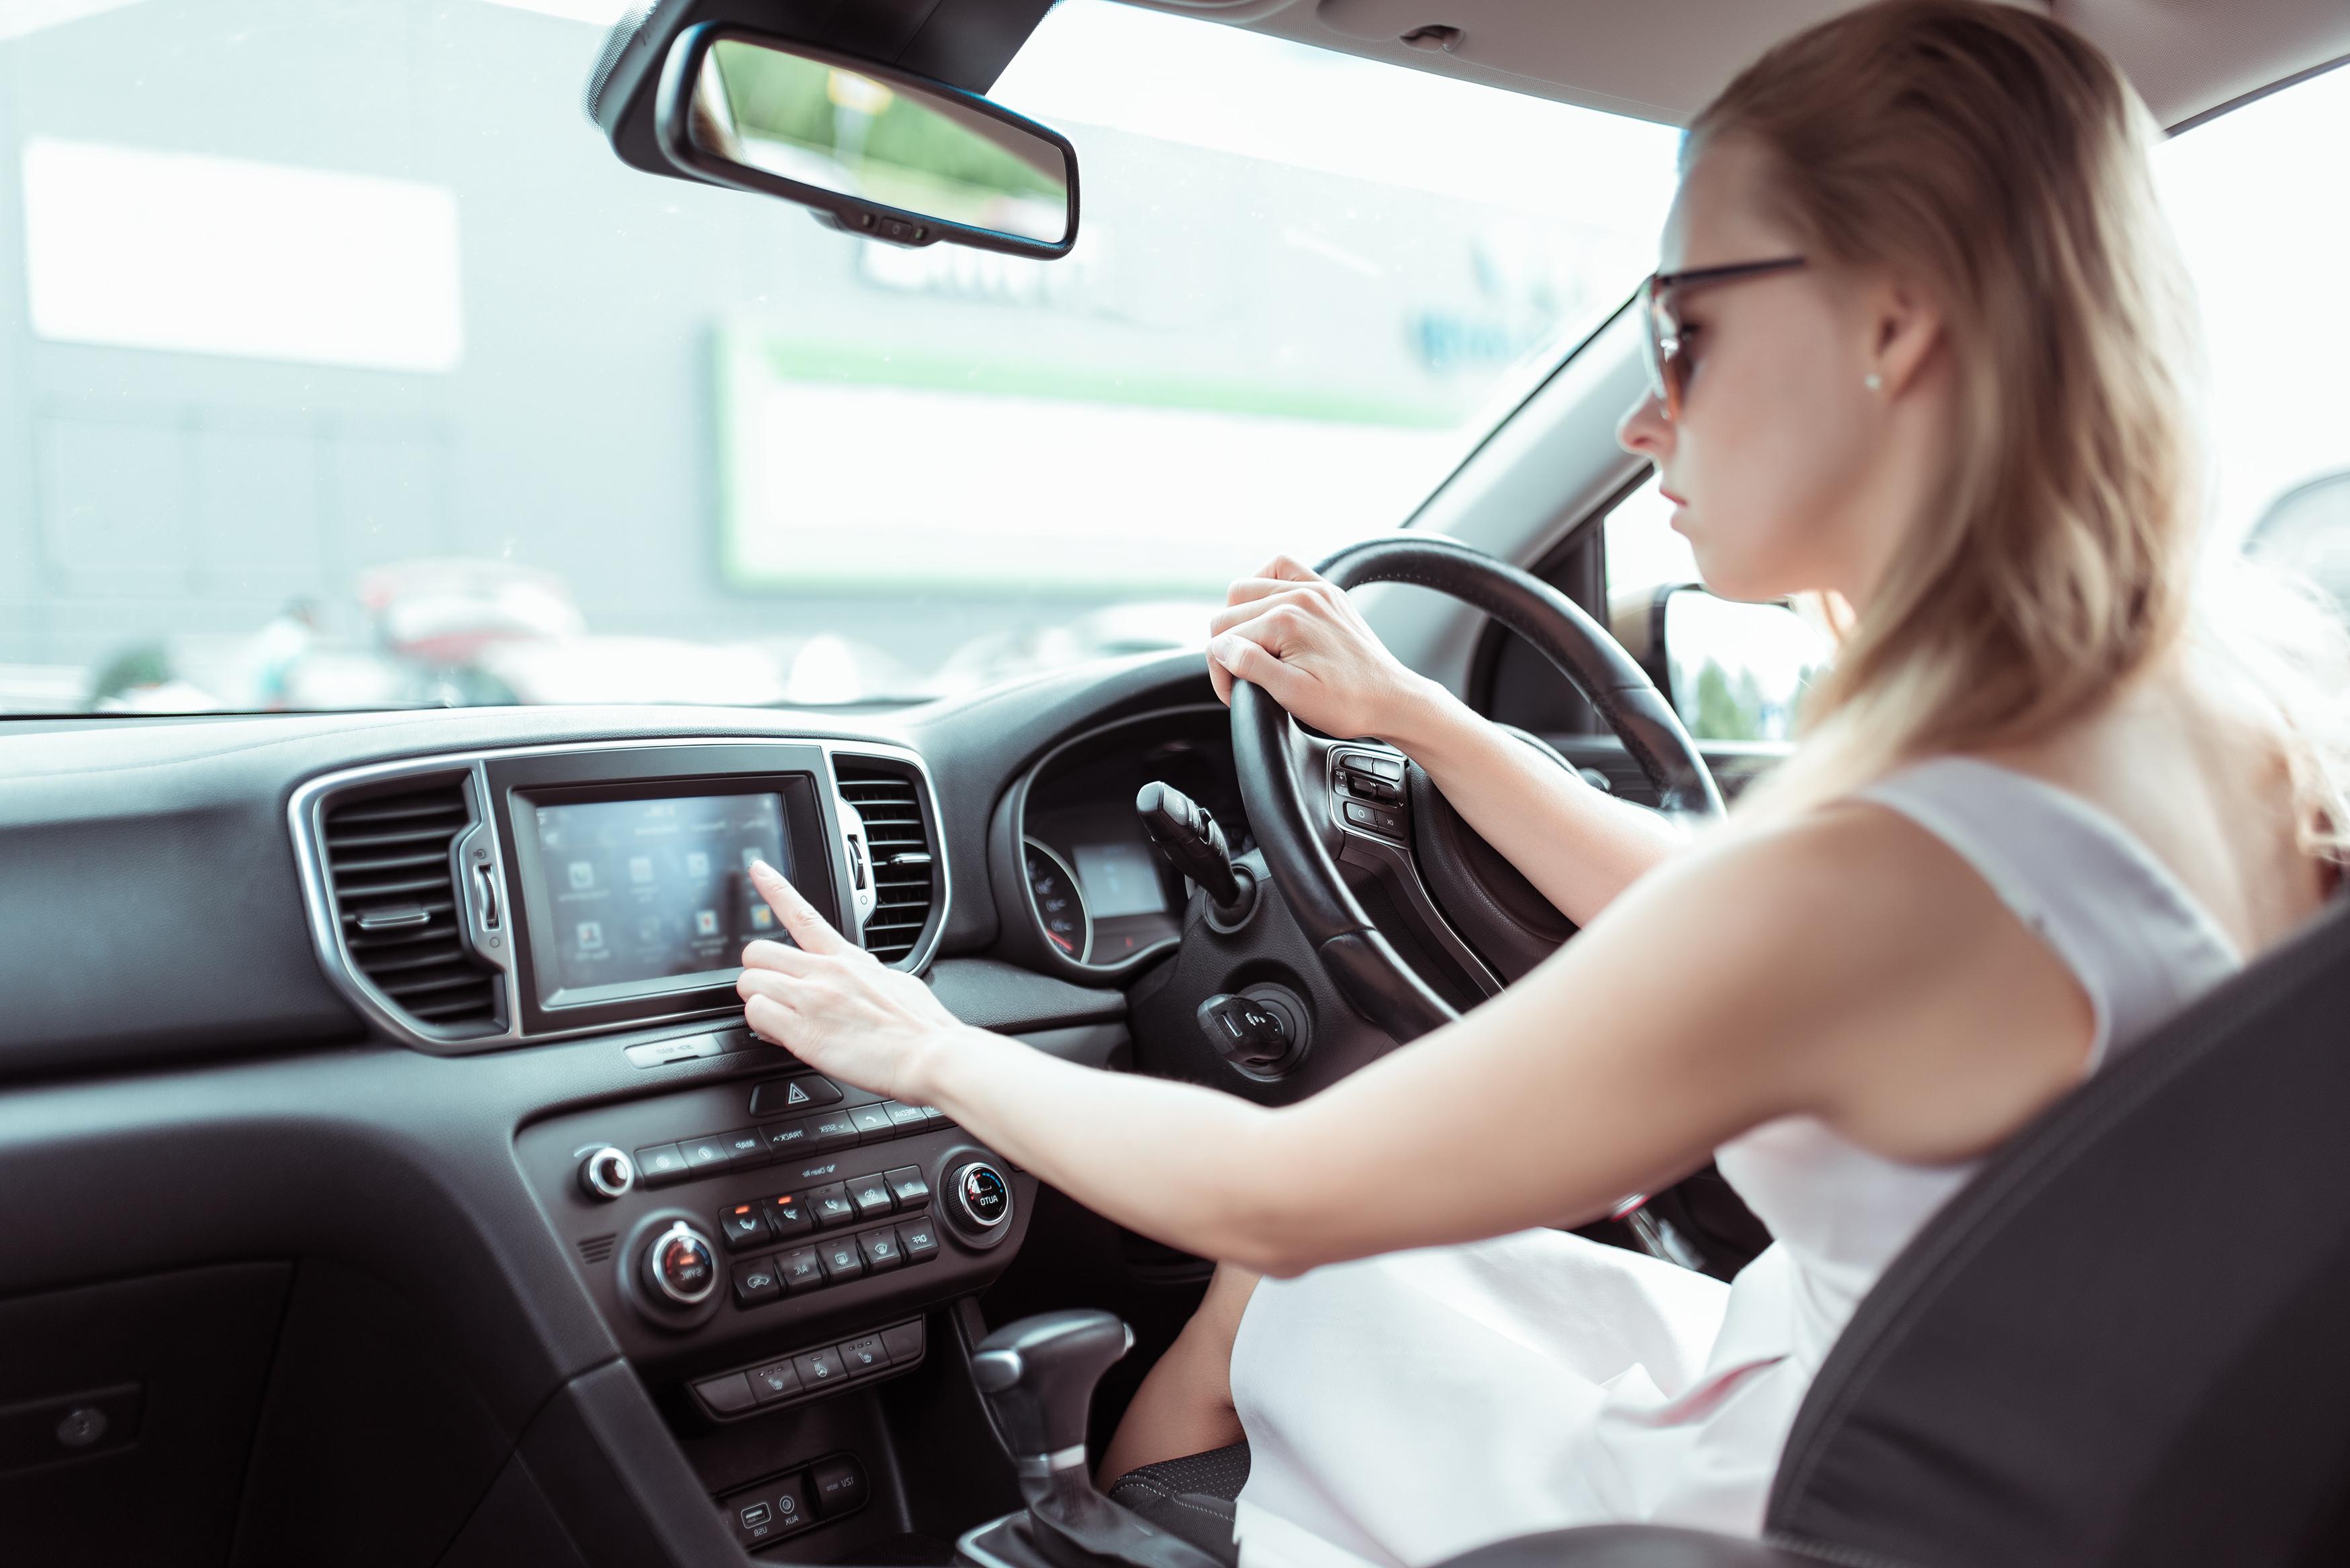 A woman in a white dress touching a car infotainment screen